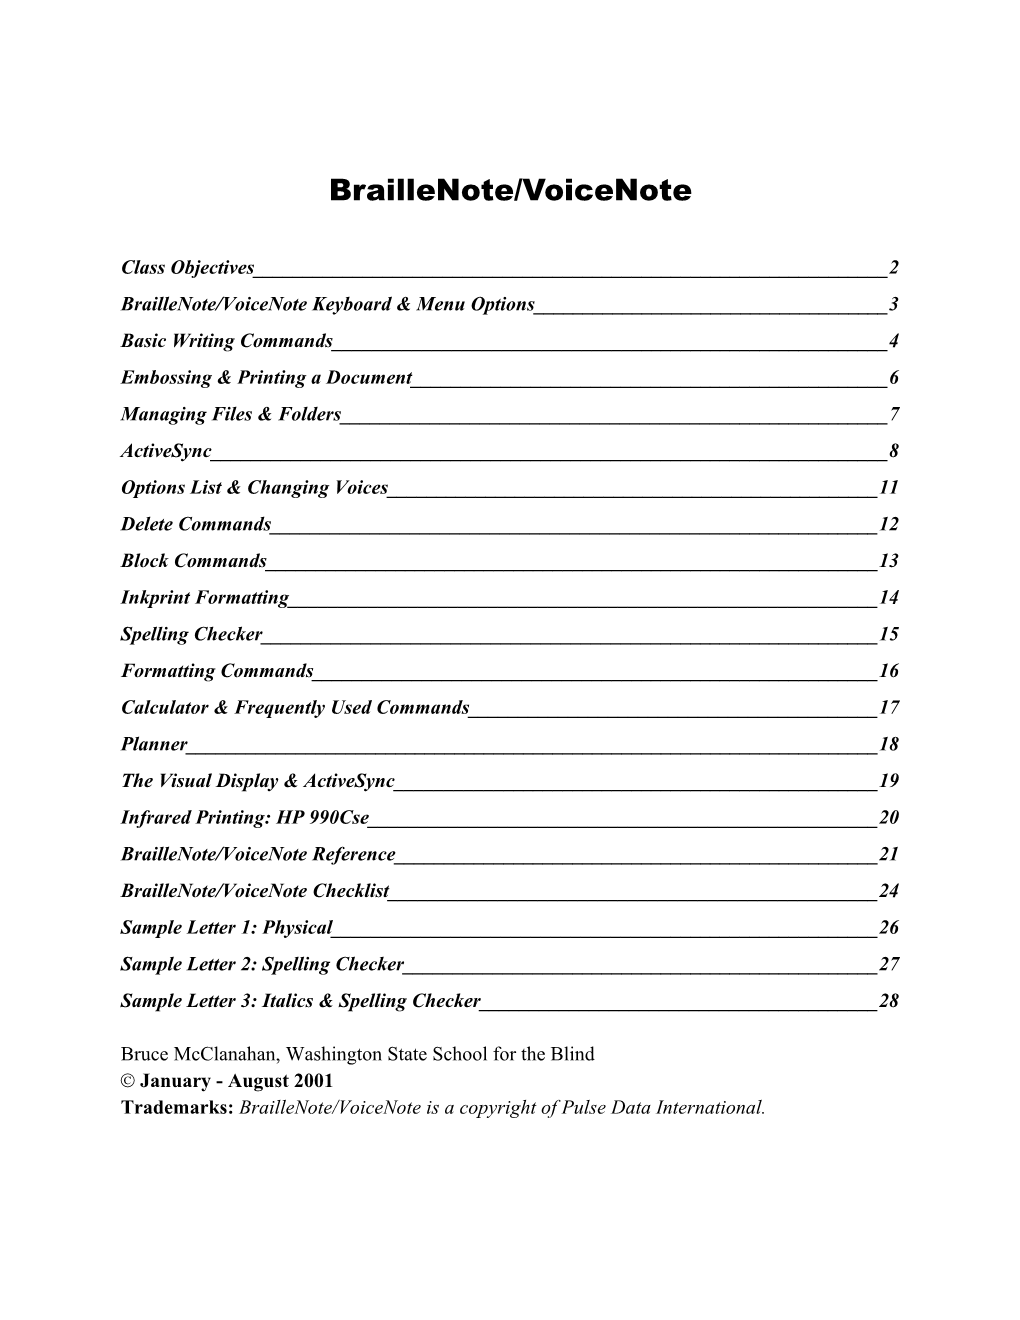 Braillenote/Voicenote Keyboard & Menu Options 3